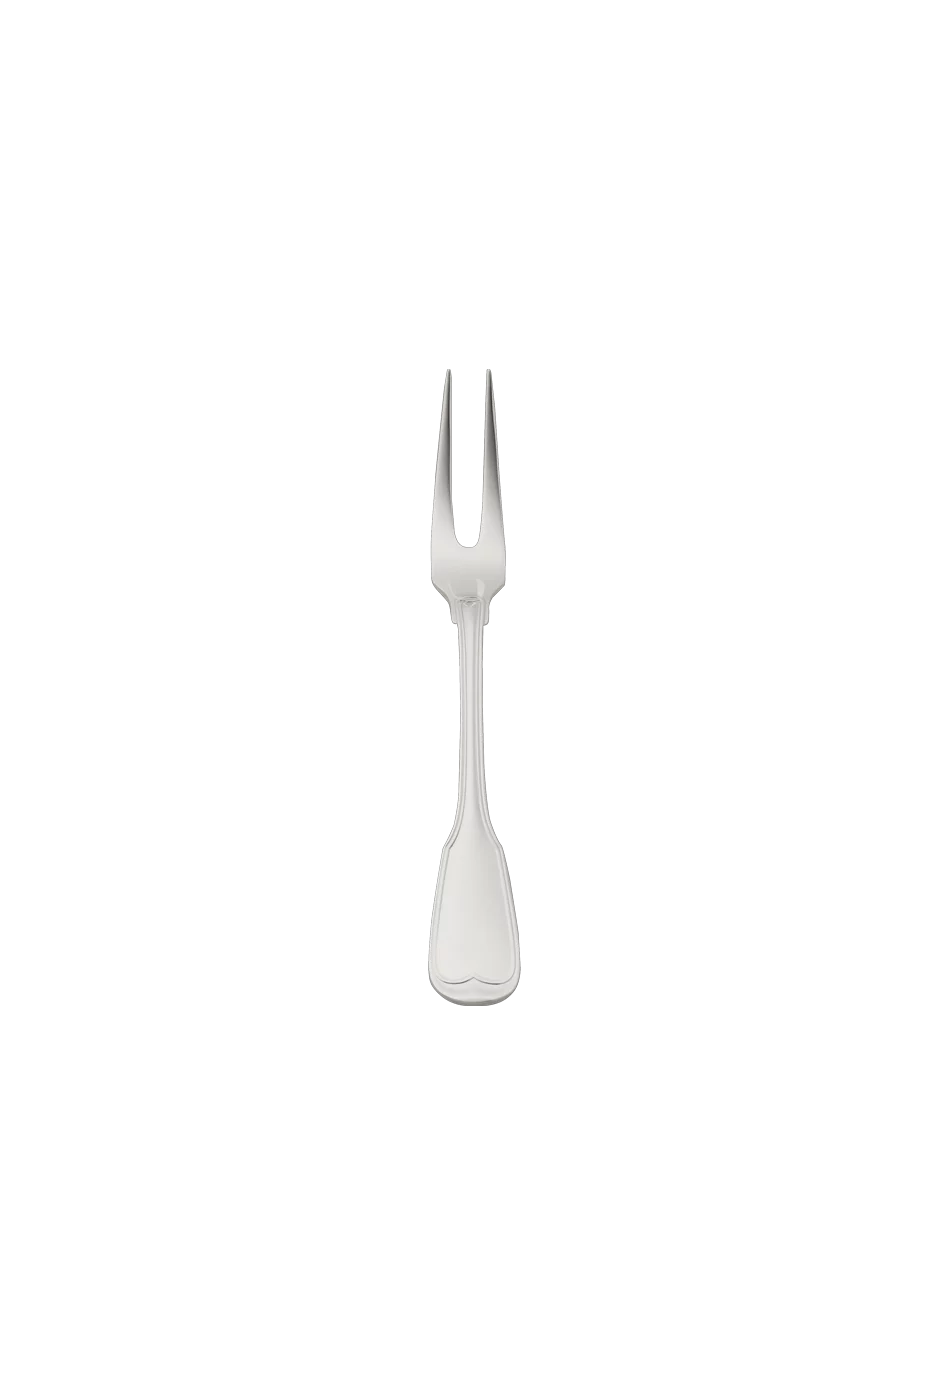 Alt-Faden Meat Fork, small (925 Sterling Silver)